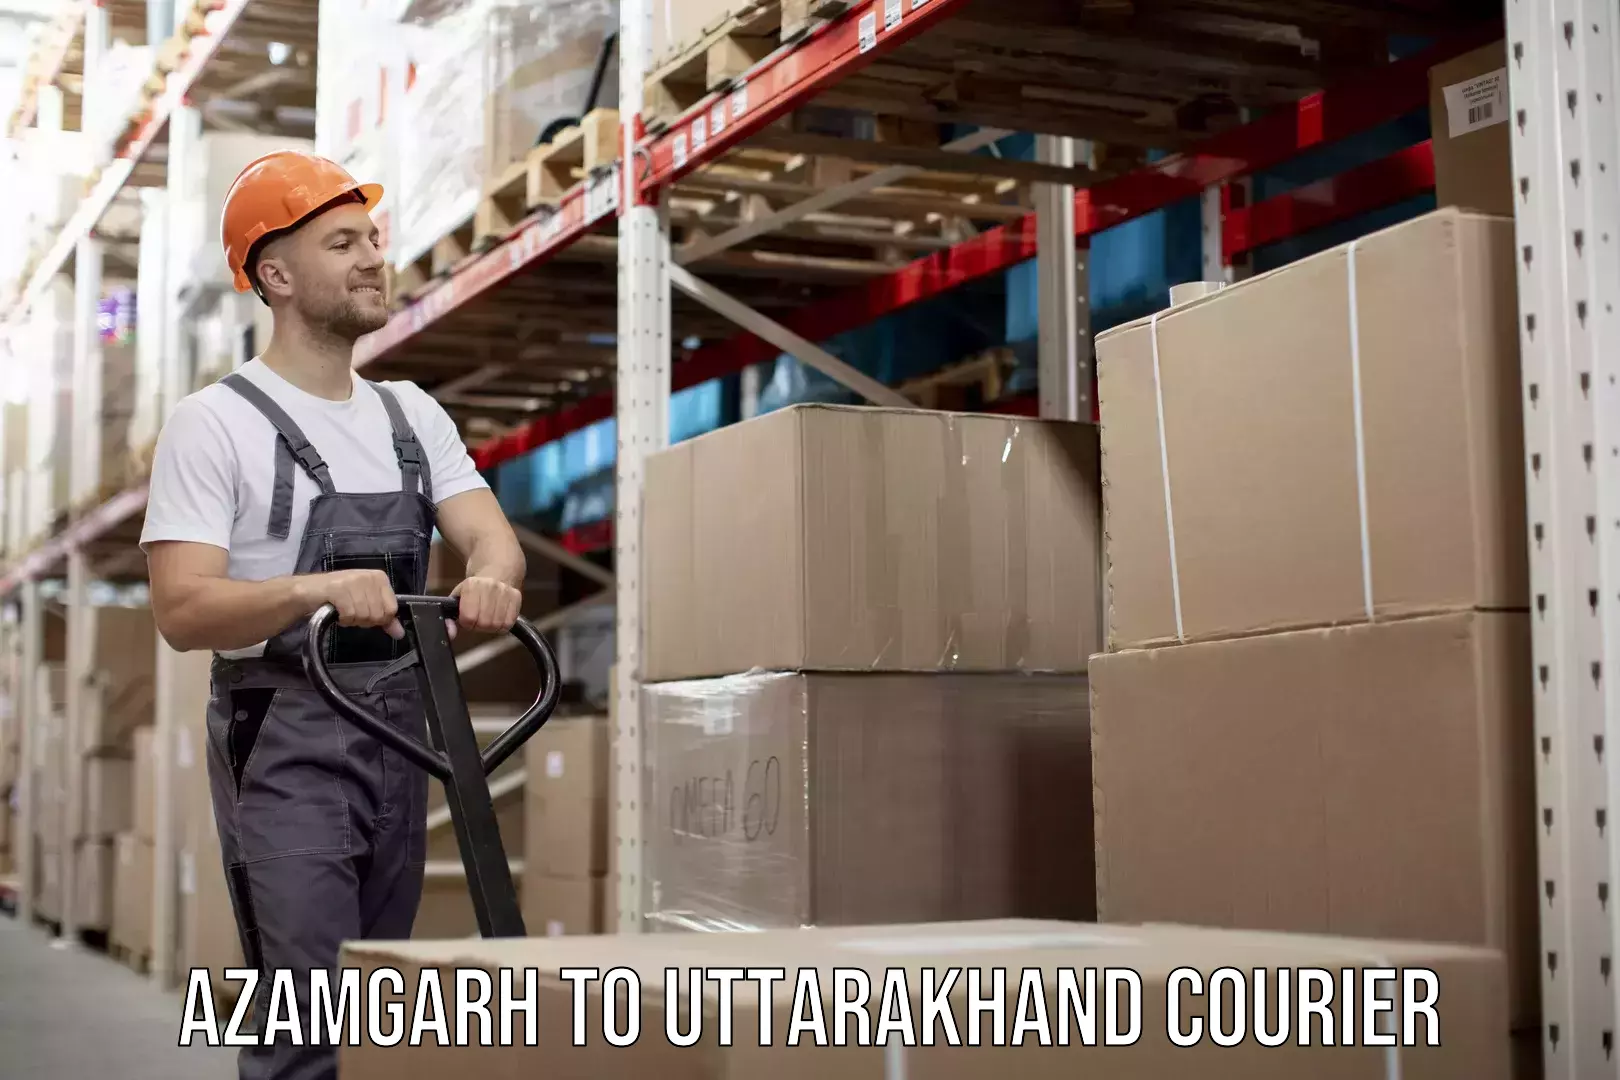 User-friendly delivery service Azamgarh to Uttarakhand